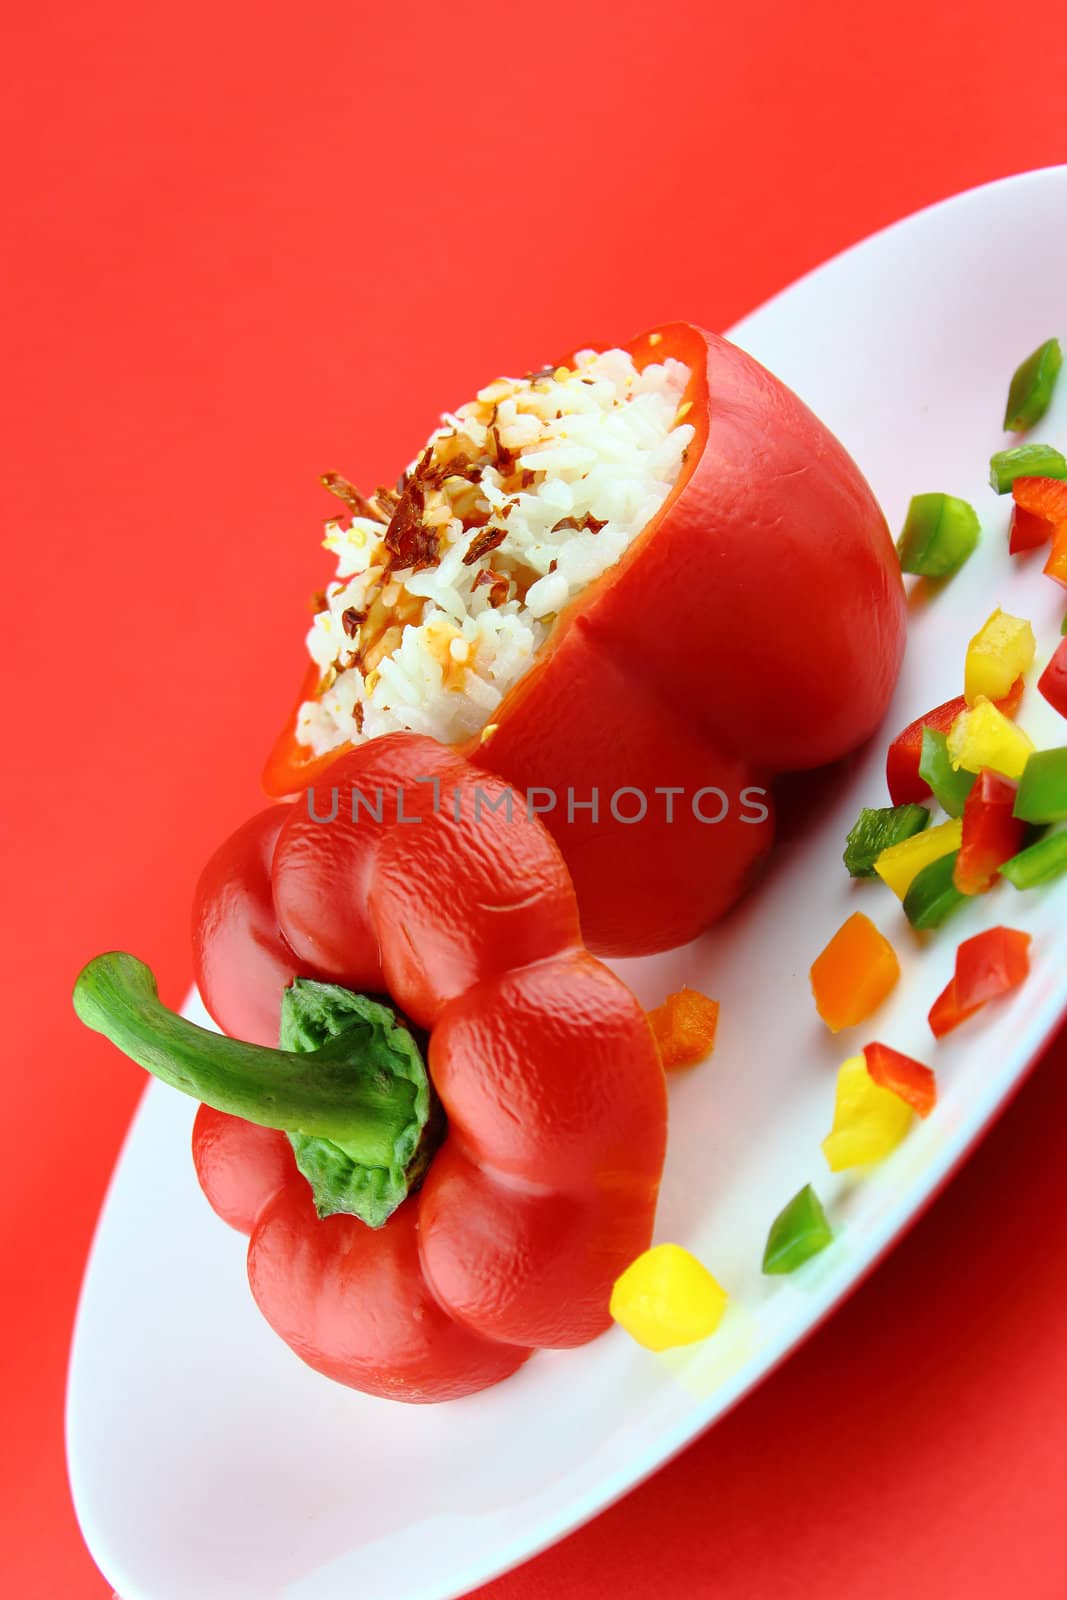 Stuffed red pepper by designsstock